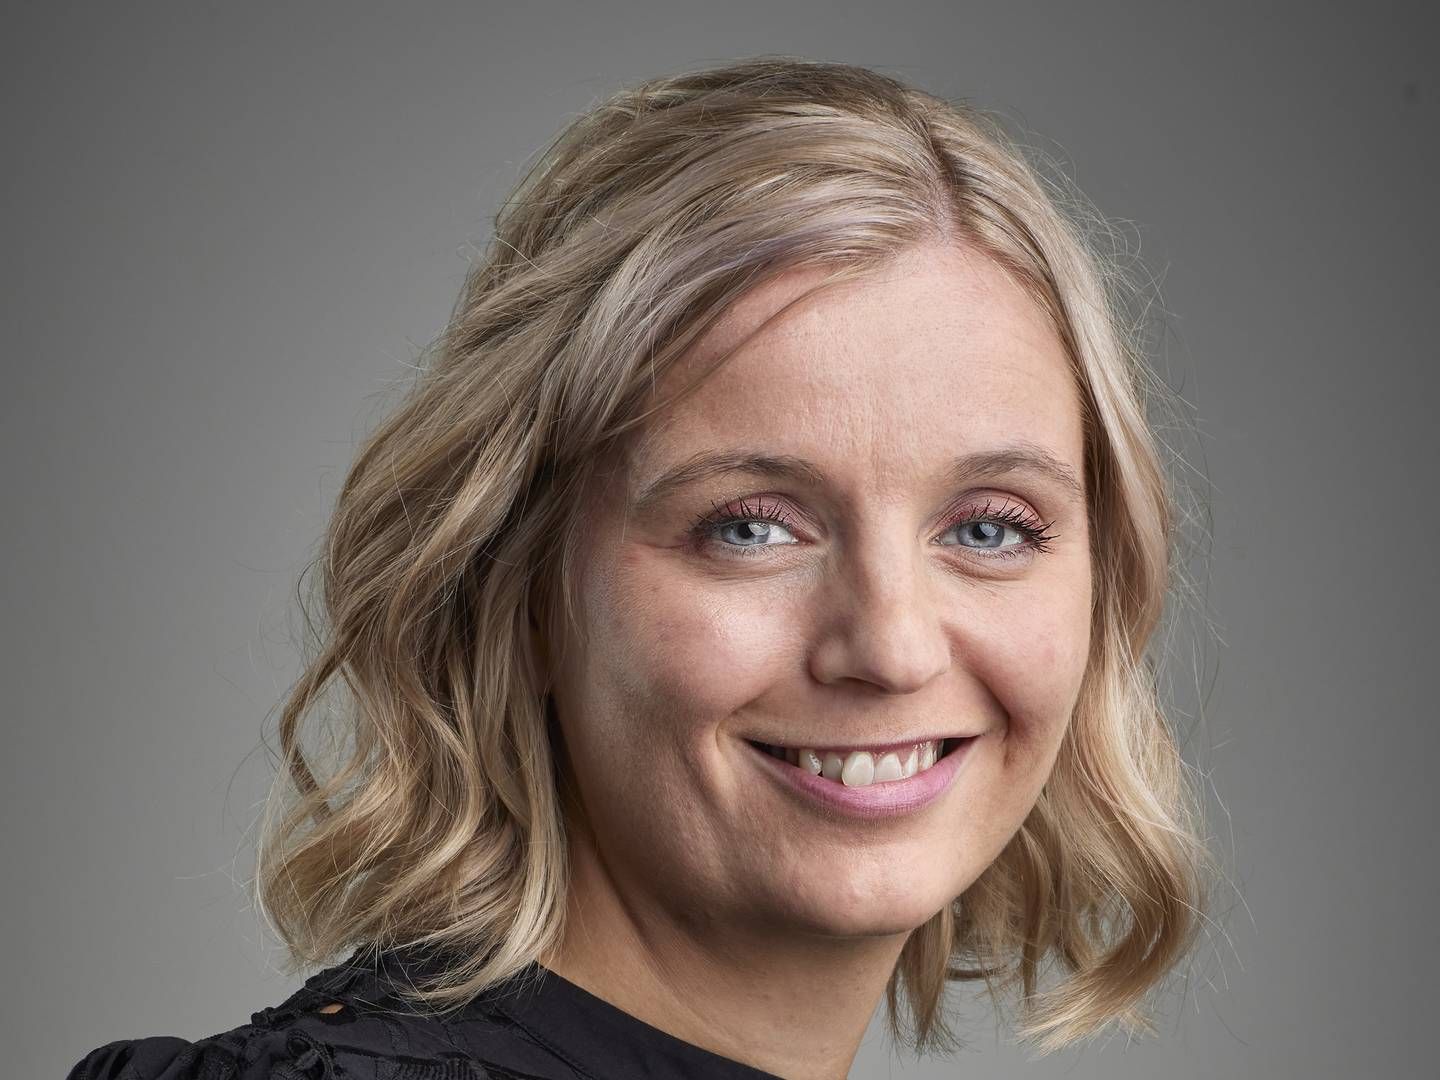 35-årige Anne-Kathrine Primdahl er ny underdirektør i Vestjysk Bank. | Foto: PR